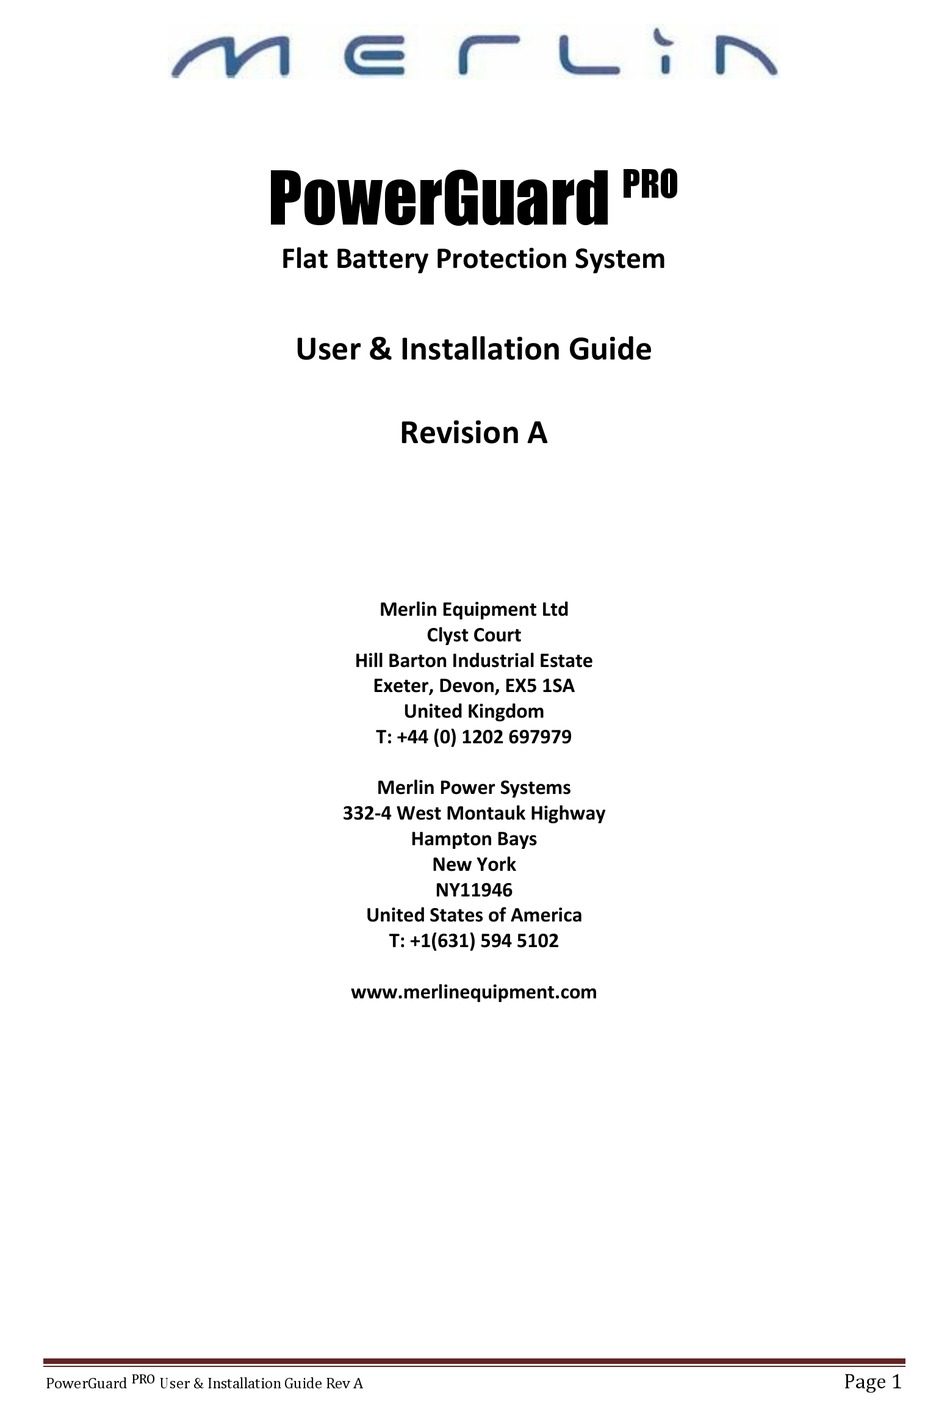 Merlin PowerGuard PRO - Flat Battery Protection